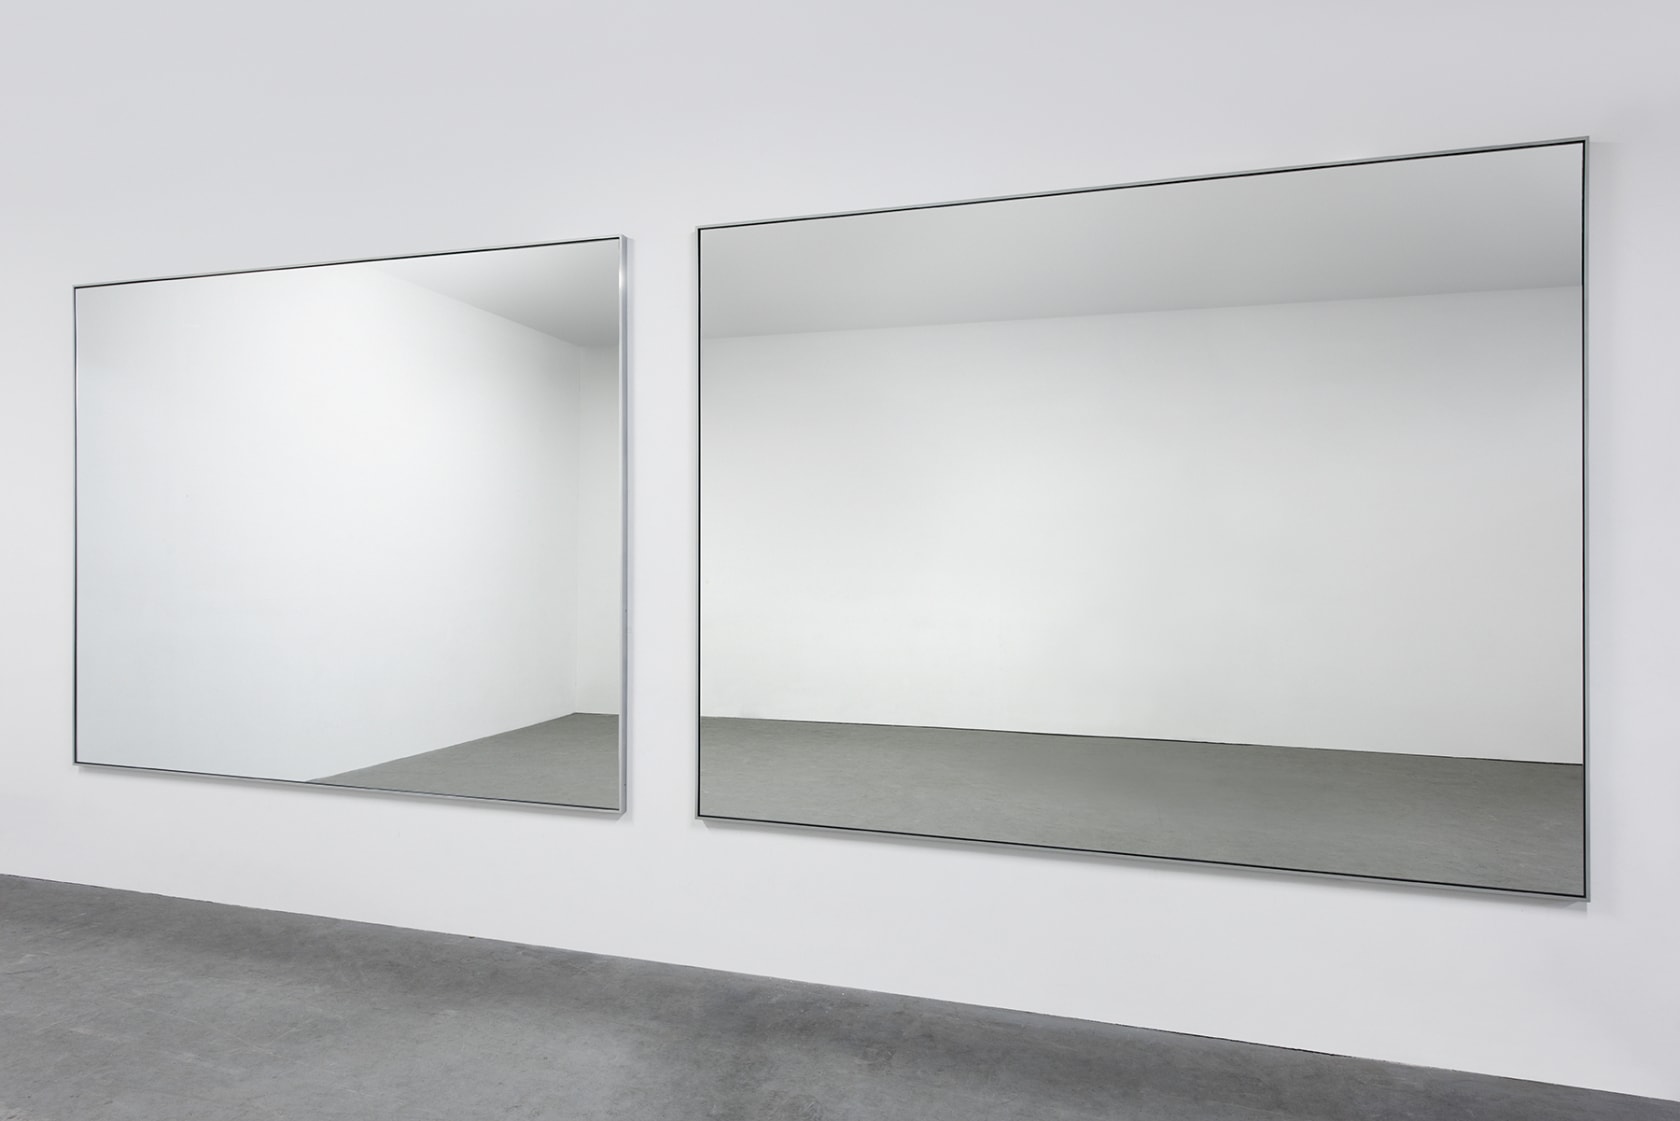 Komkommer ontslaan Verraad Gerhard Richter, Spiegel (Mirror), 687-5/6, 1989/2016 | Marian Goodman